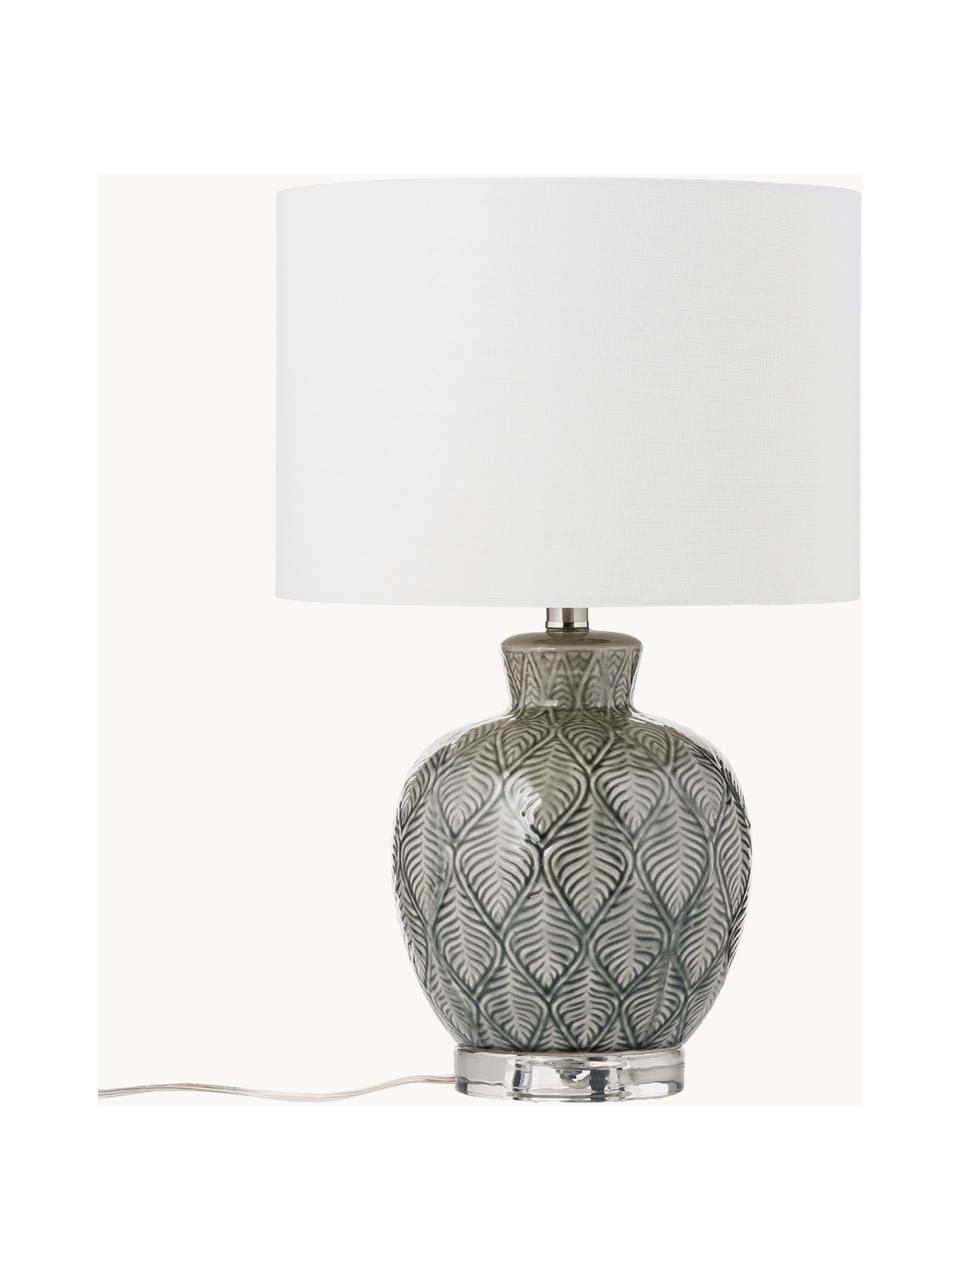 Grote keramische tafellamp Brooklyn, Lampenkap: textiel, Lampvoet: keramiek, Voetstuk: kristalglas, Wit, grijs, Ø 33 x H 53 cm